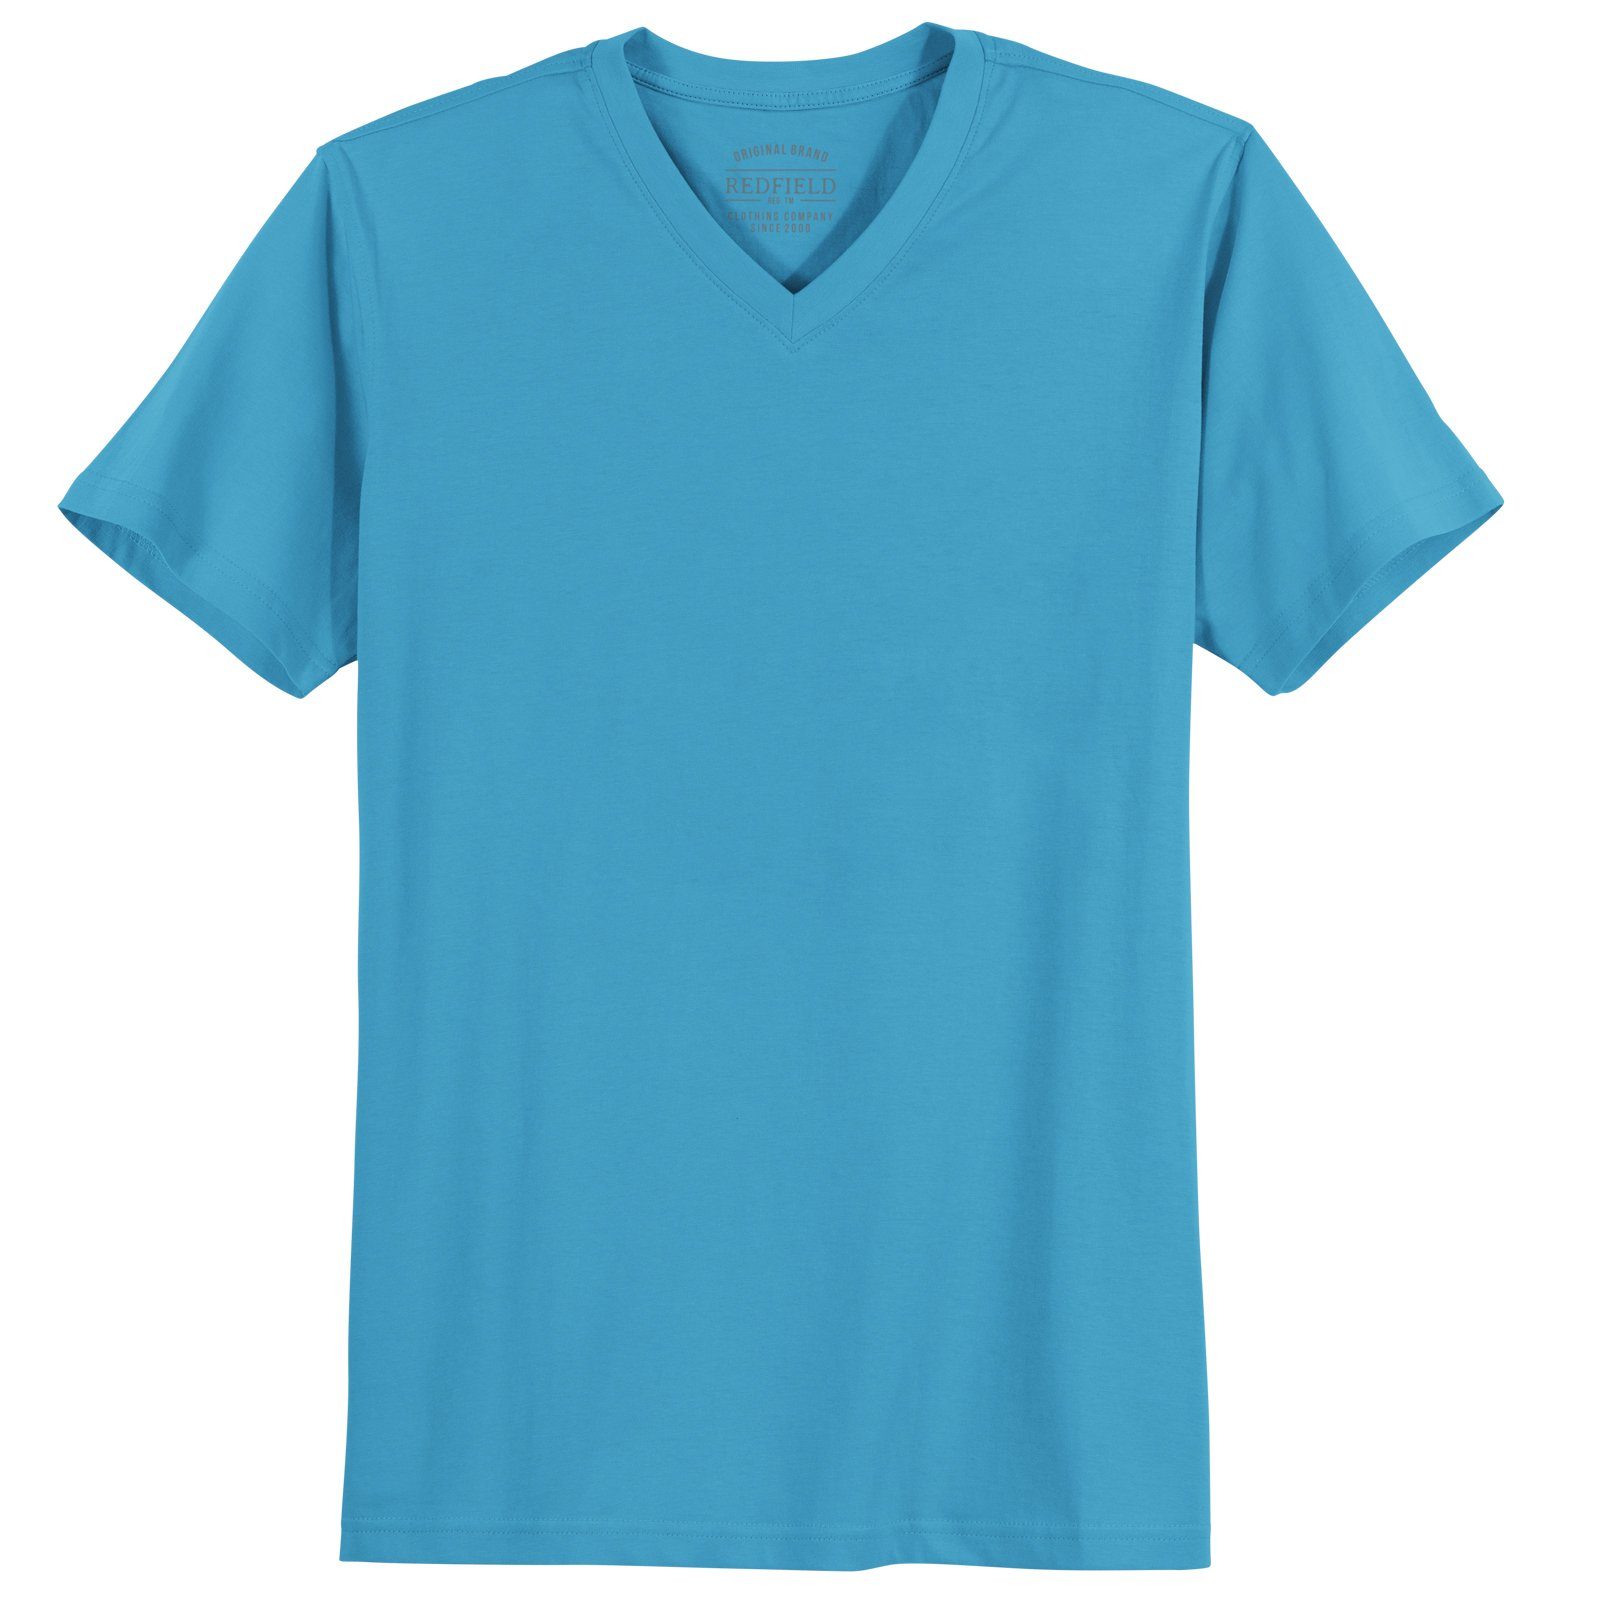 Herren azurblau Redfield redfield V-Neck T-Shirt V-Shirt Große Größen